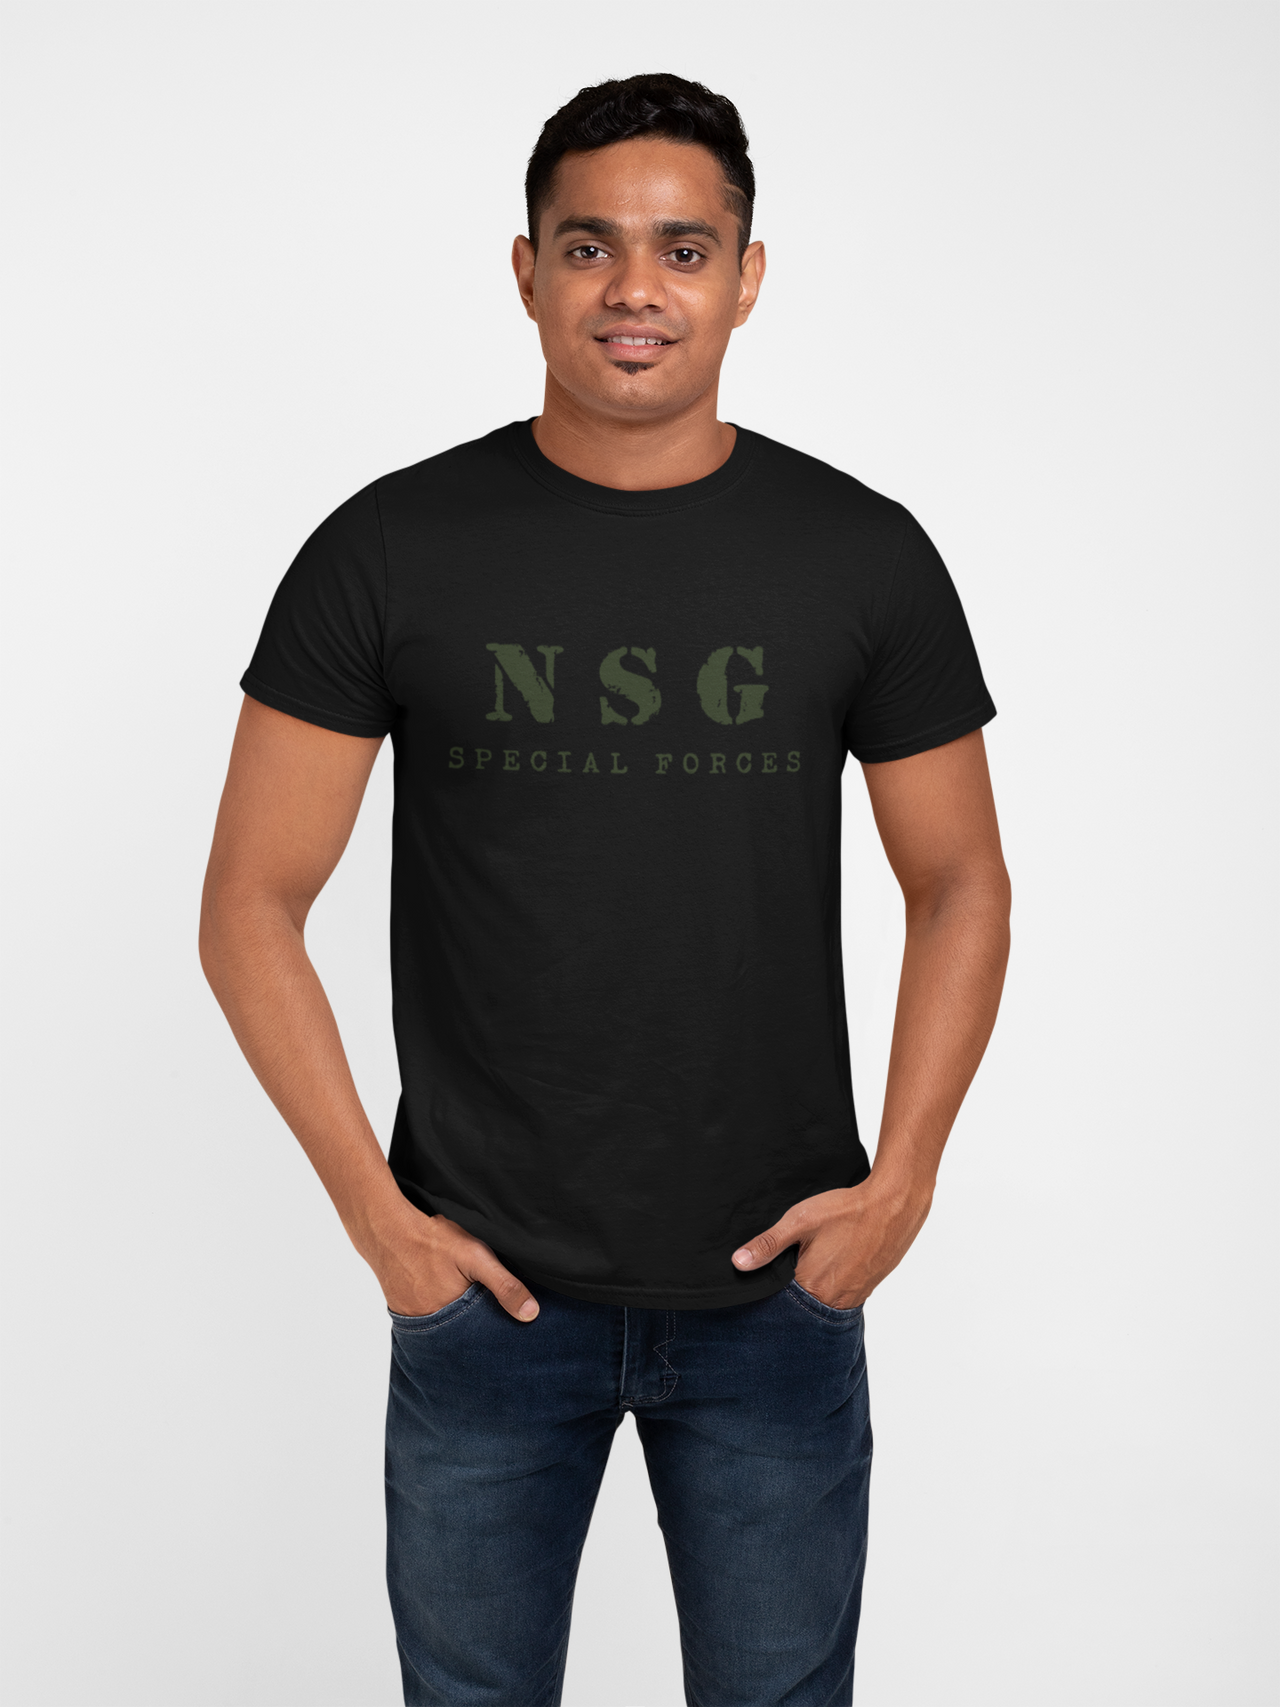 NSG T-shirt - NSG - Special Forces (Men)